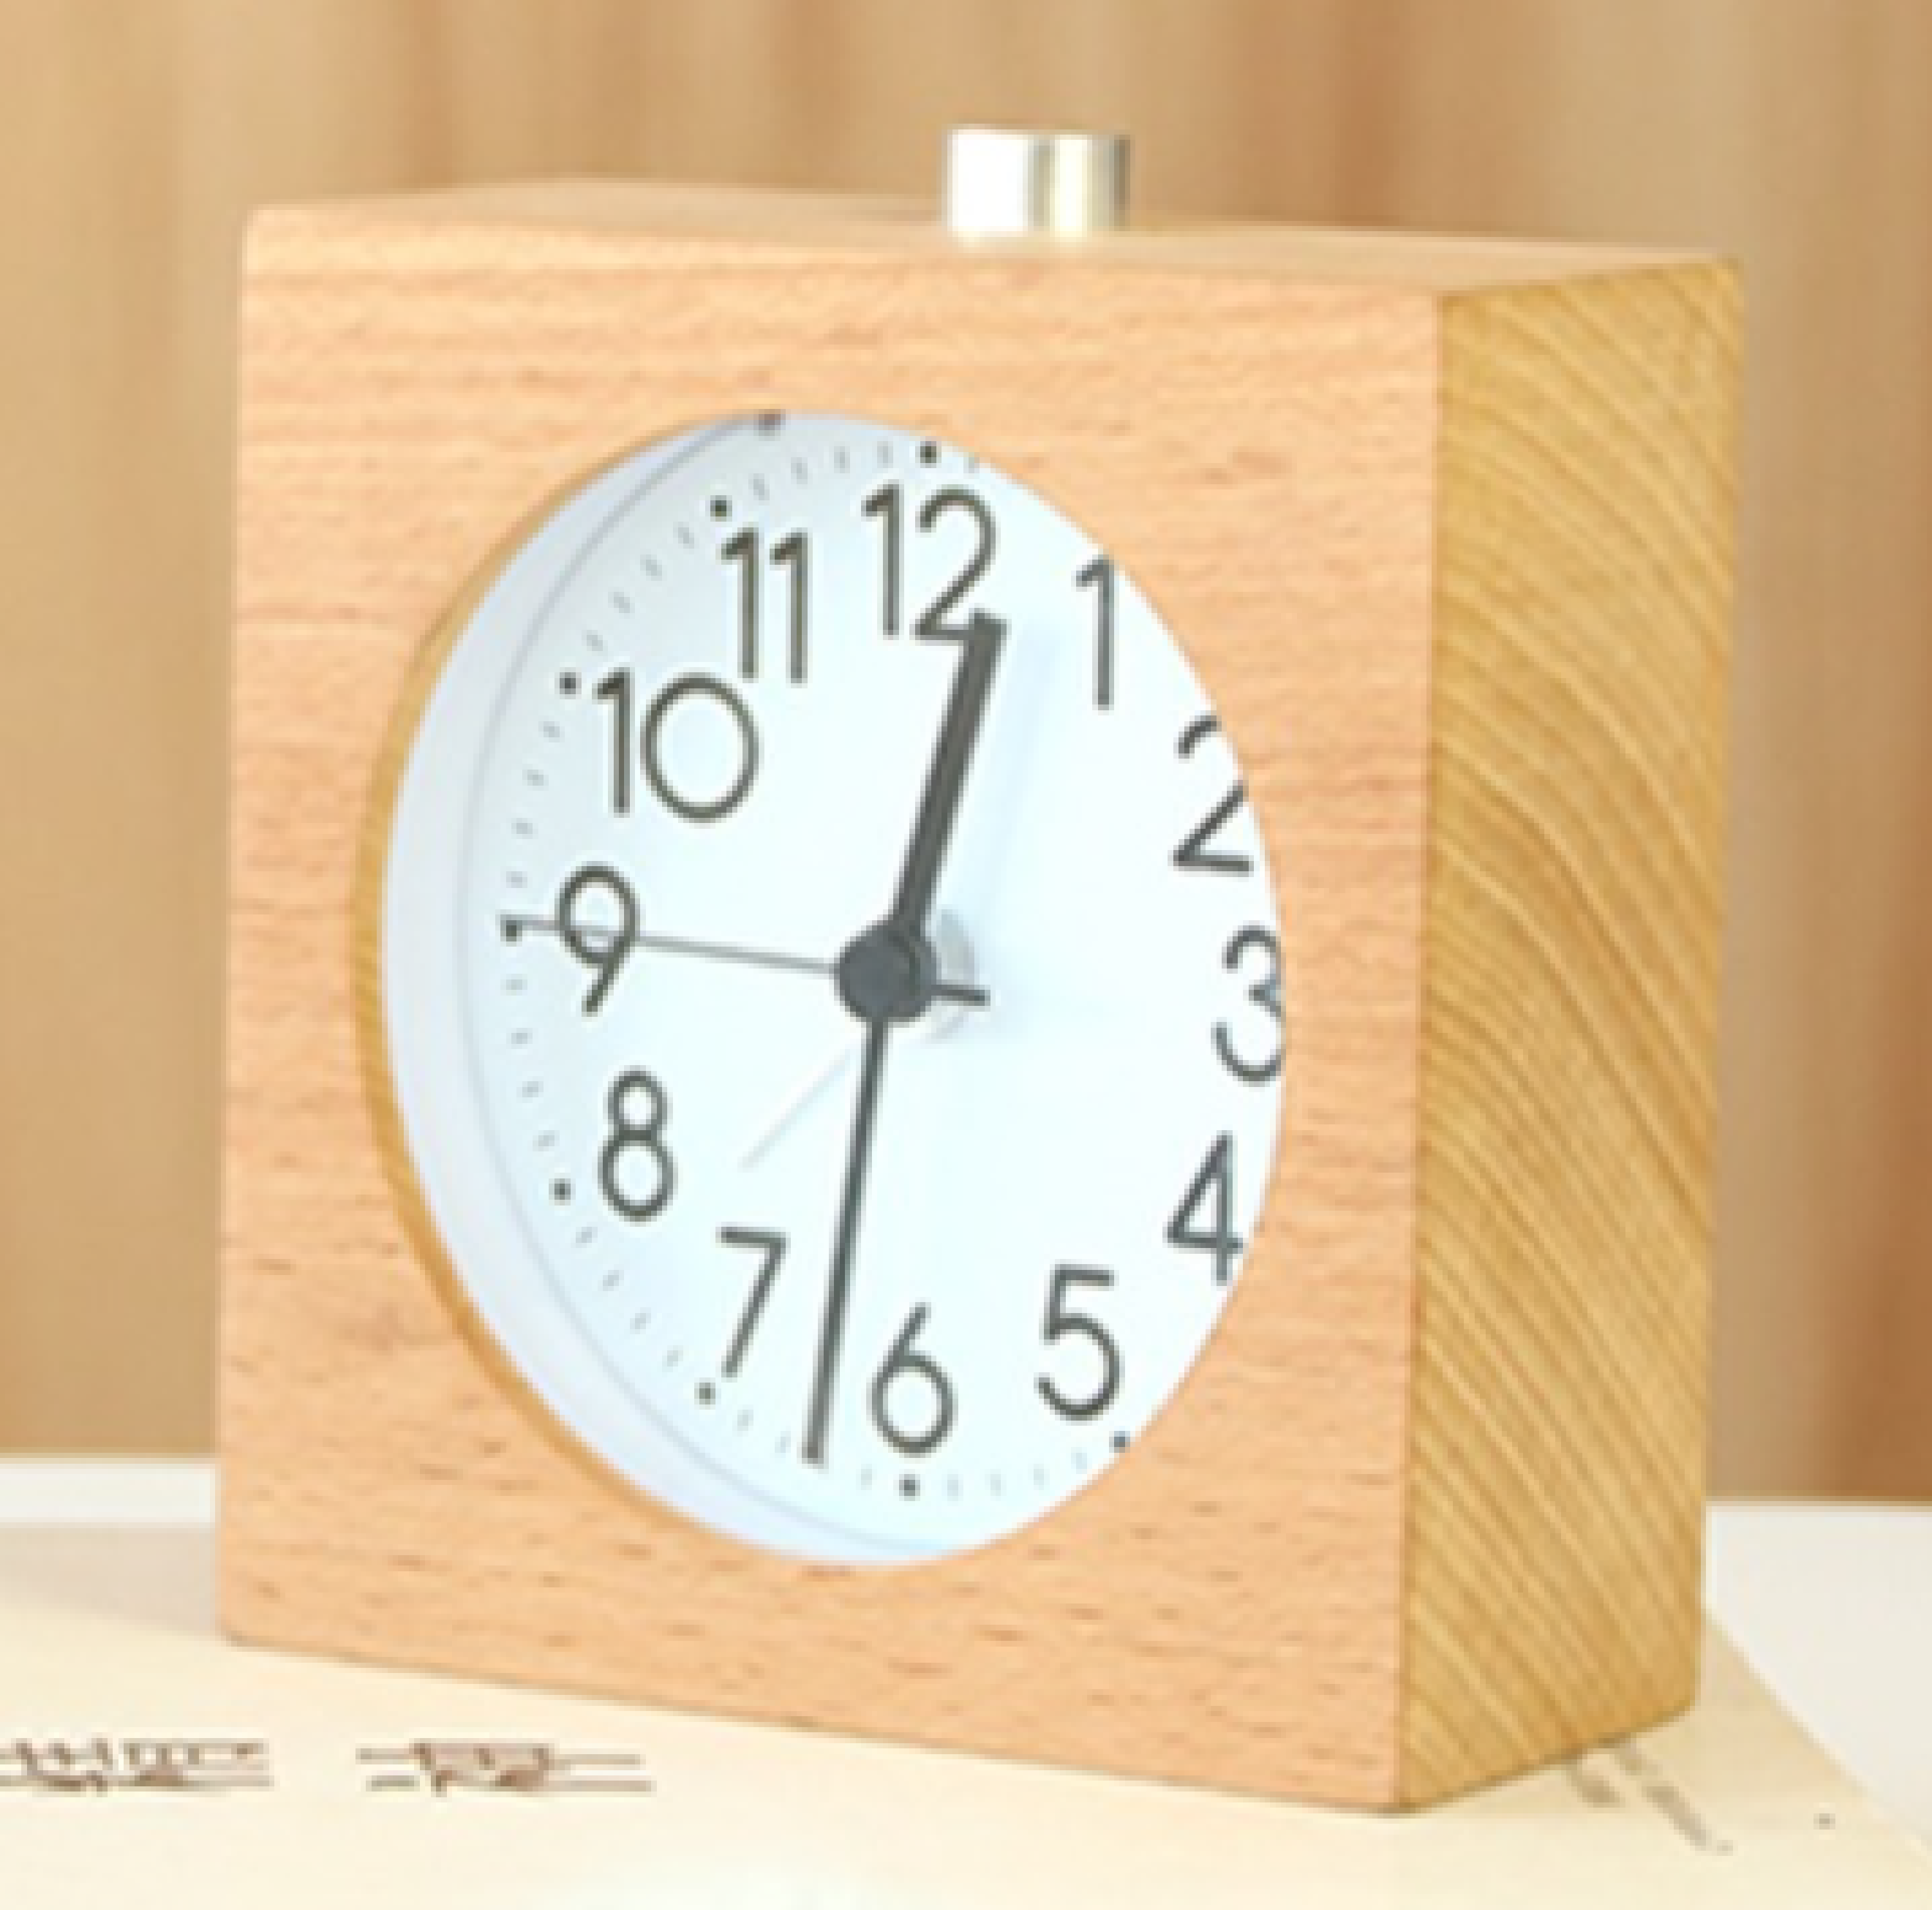 Solid wood clock, student's lazy alarm clock